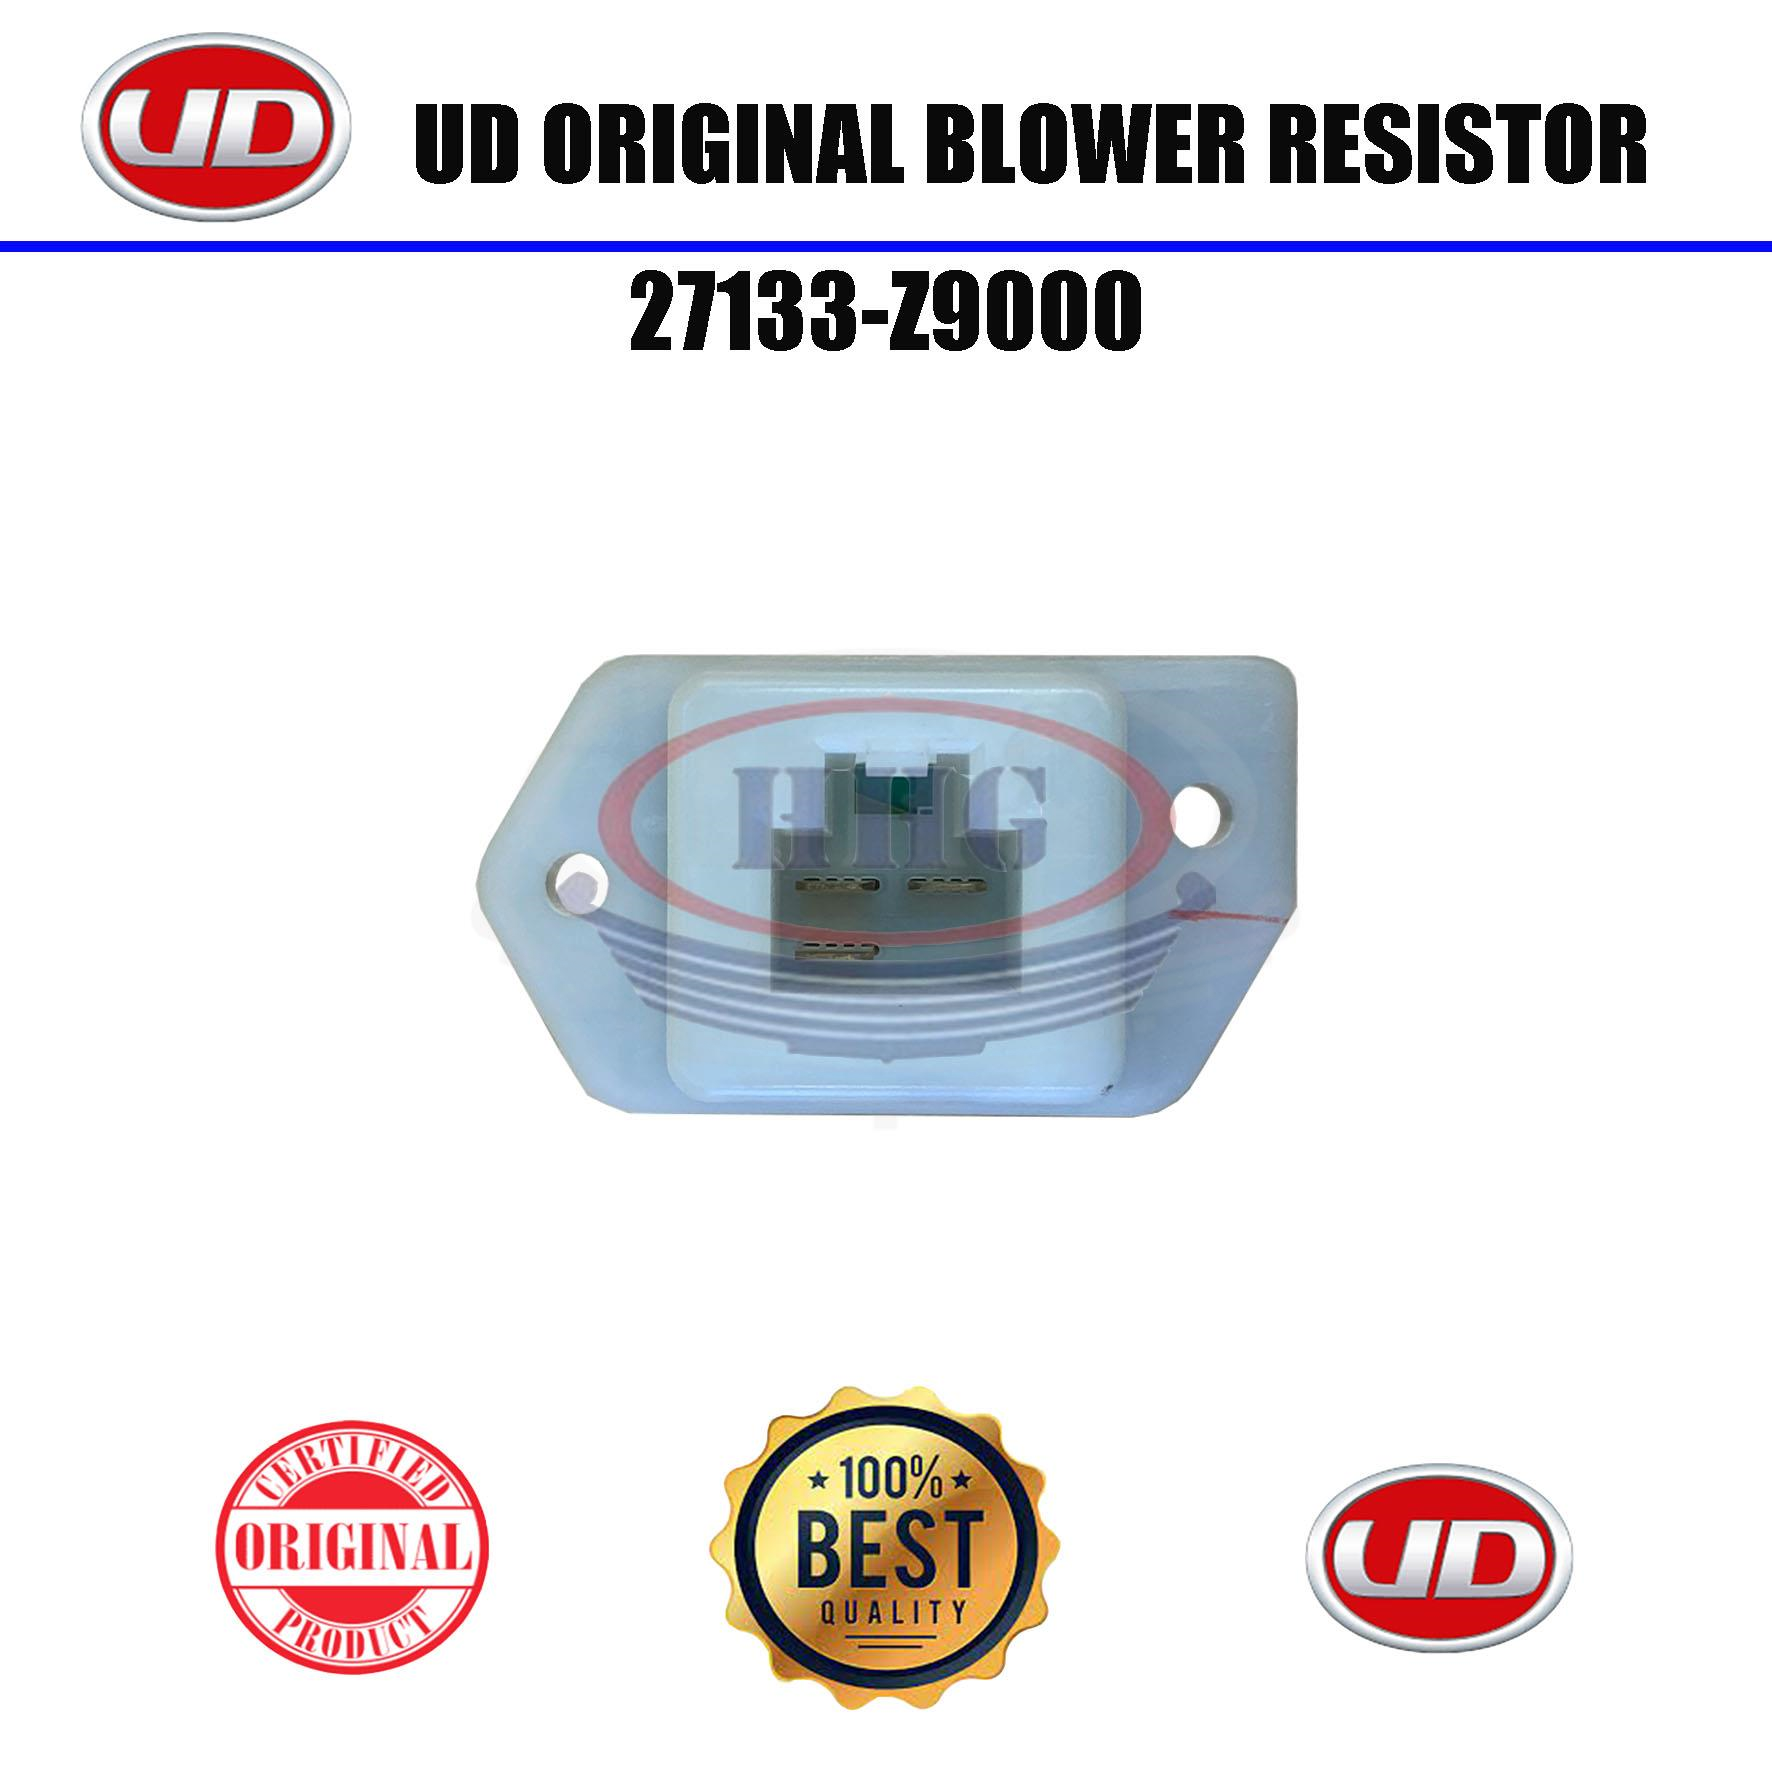 UD Original CD48 Blower Resistor (27133-Z9000)